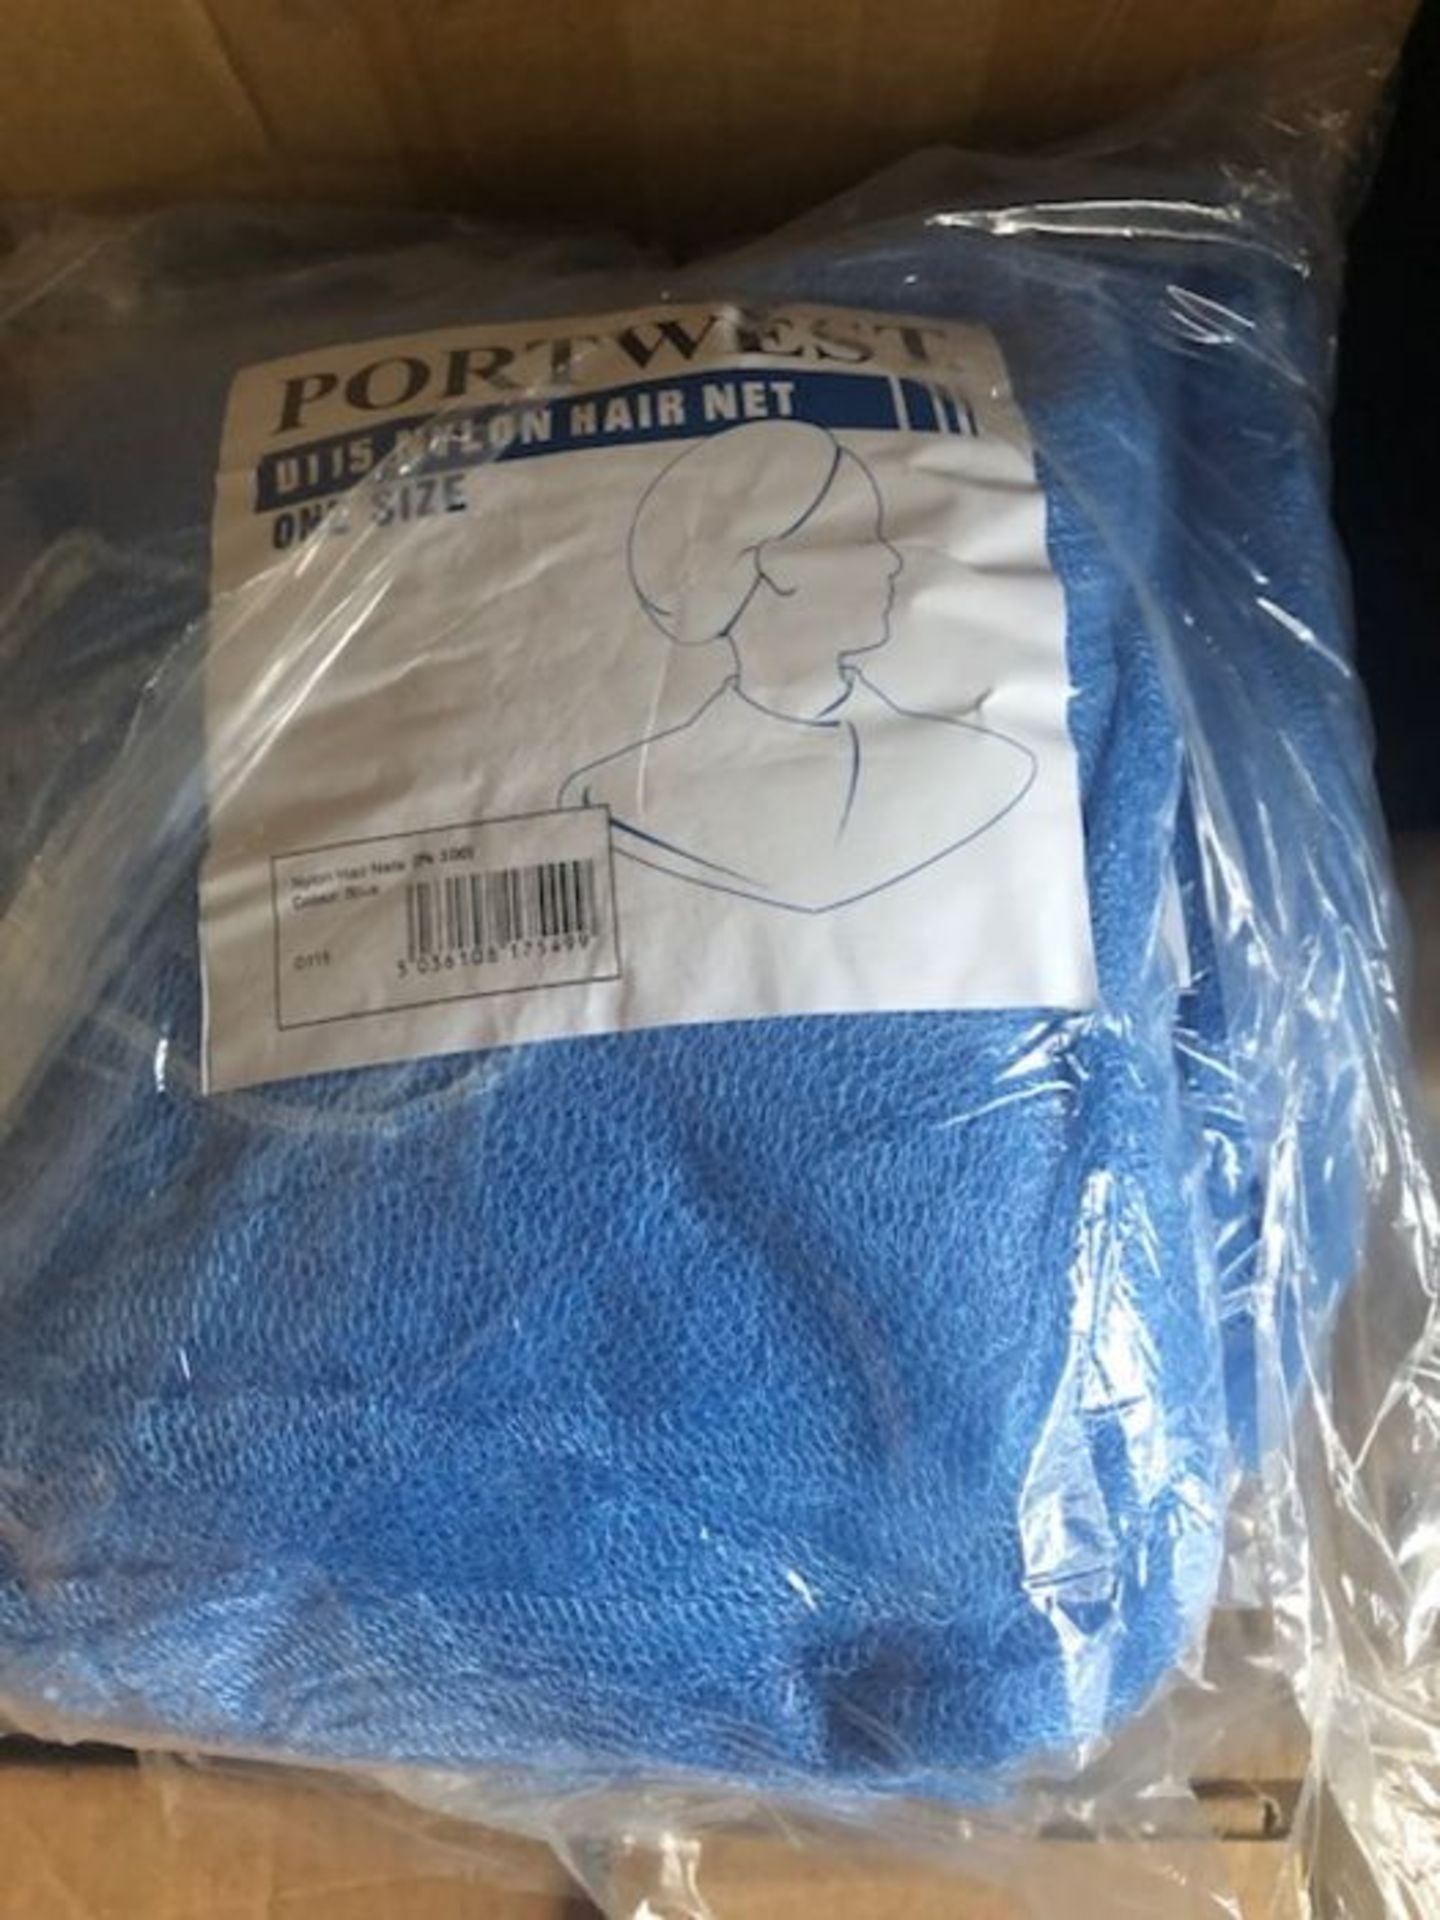 Box of 10,000 x Portwest D115 Nylon Disposable Hairnet - H9R 2000150939 - Image 5 of 6